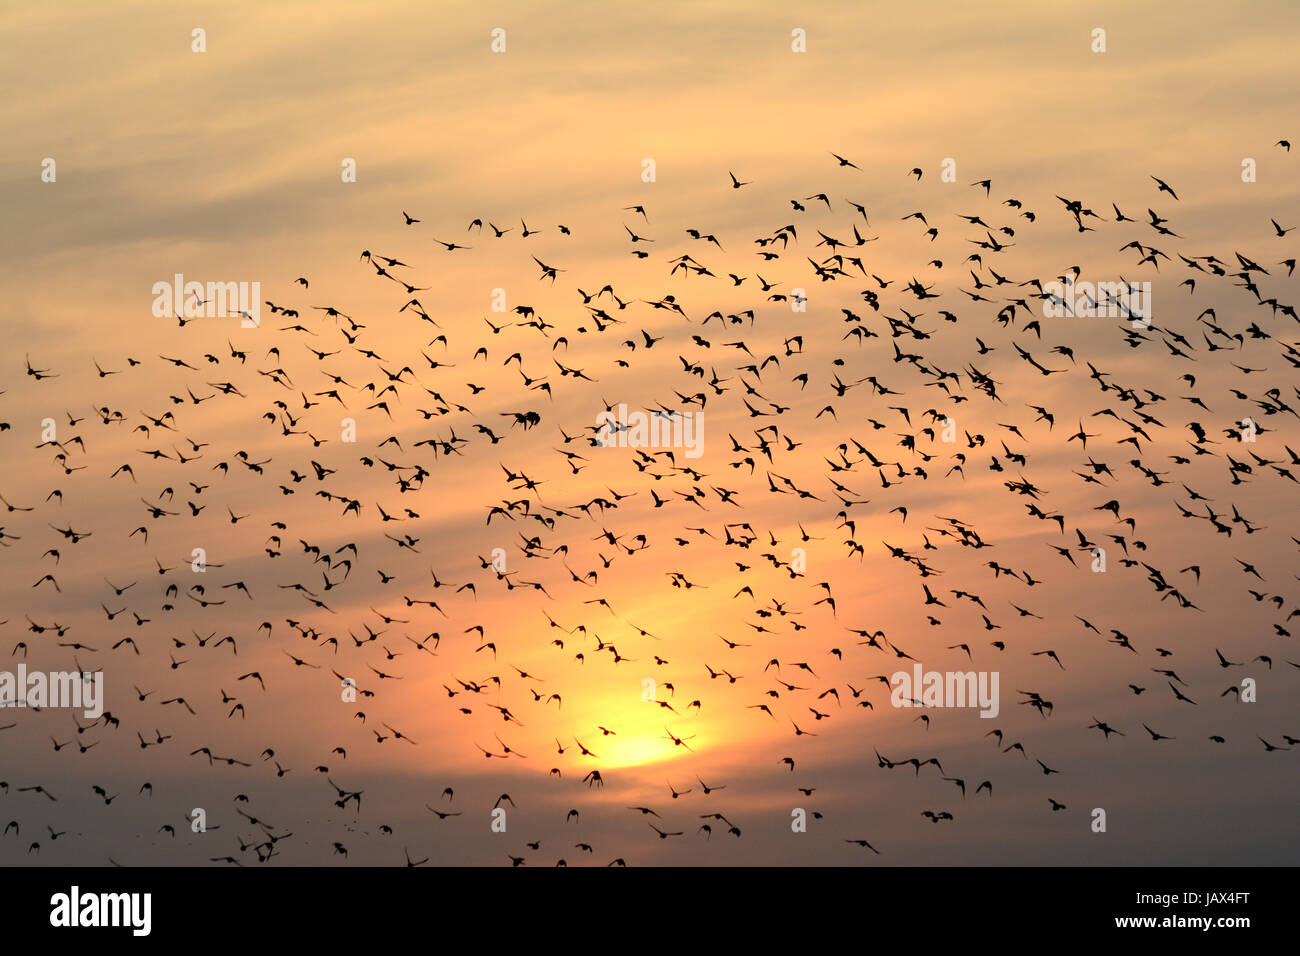 FLOCKING BEHAVIOR IN BIRDS IN EVENING Stock Photo